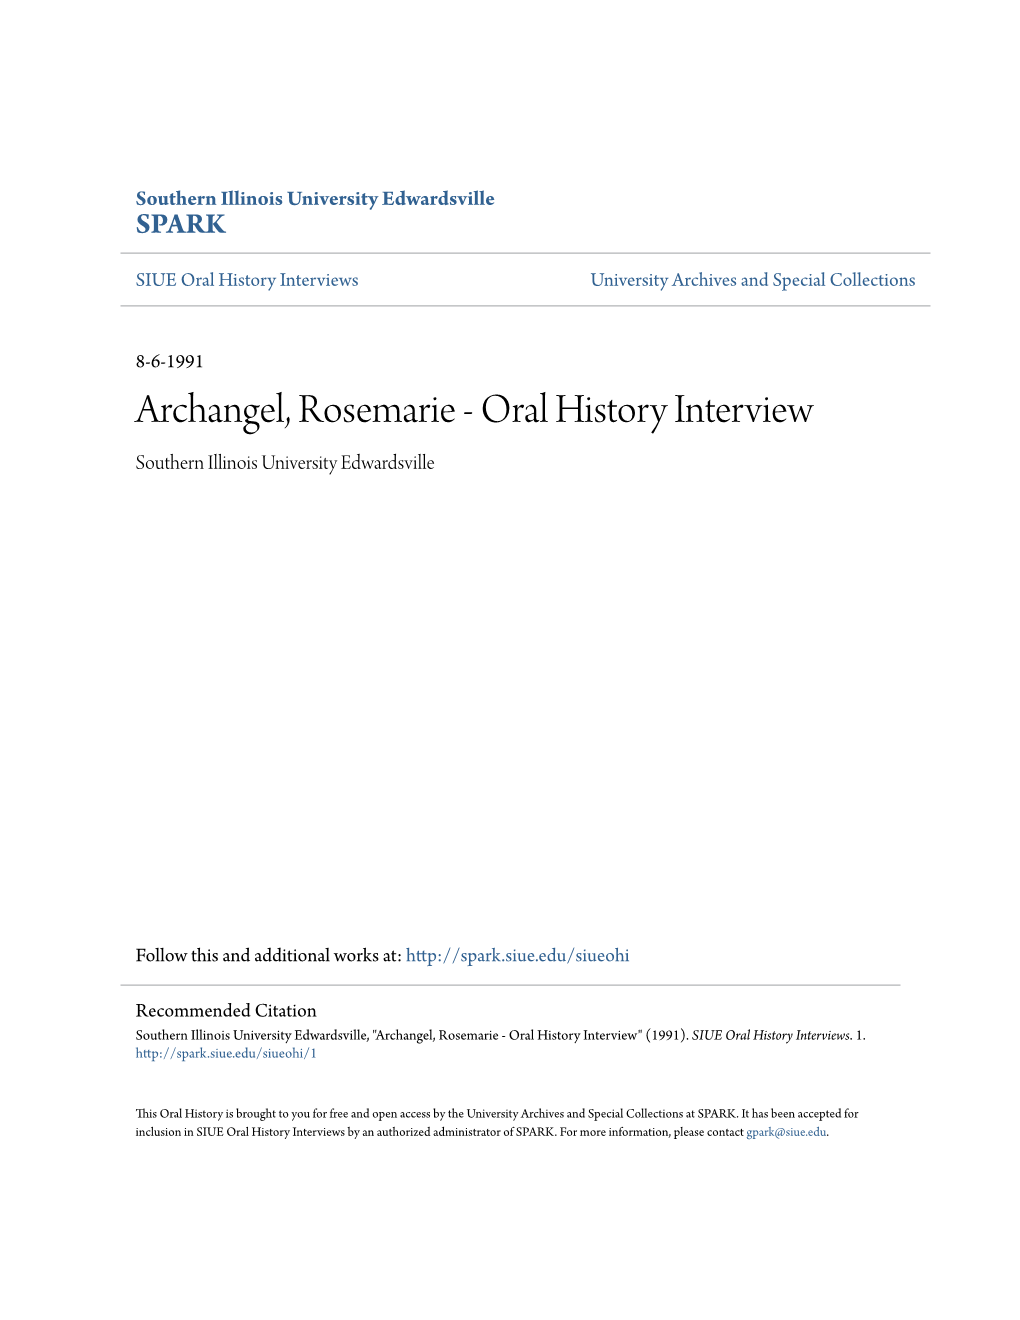 Archangel, Rosemarie - Oral History Interview Southern Illinois University Edwardsville